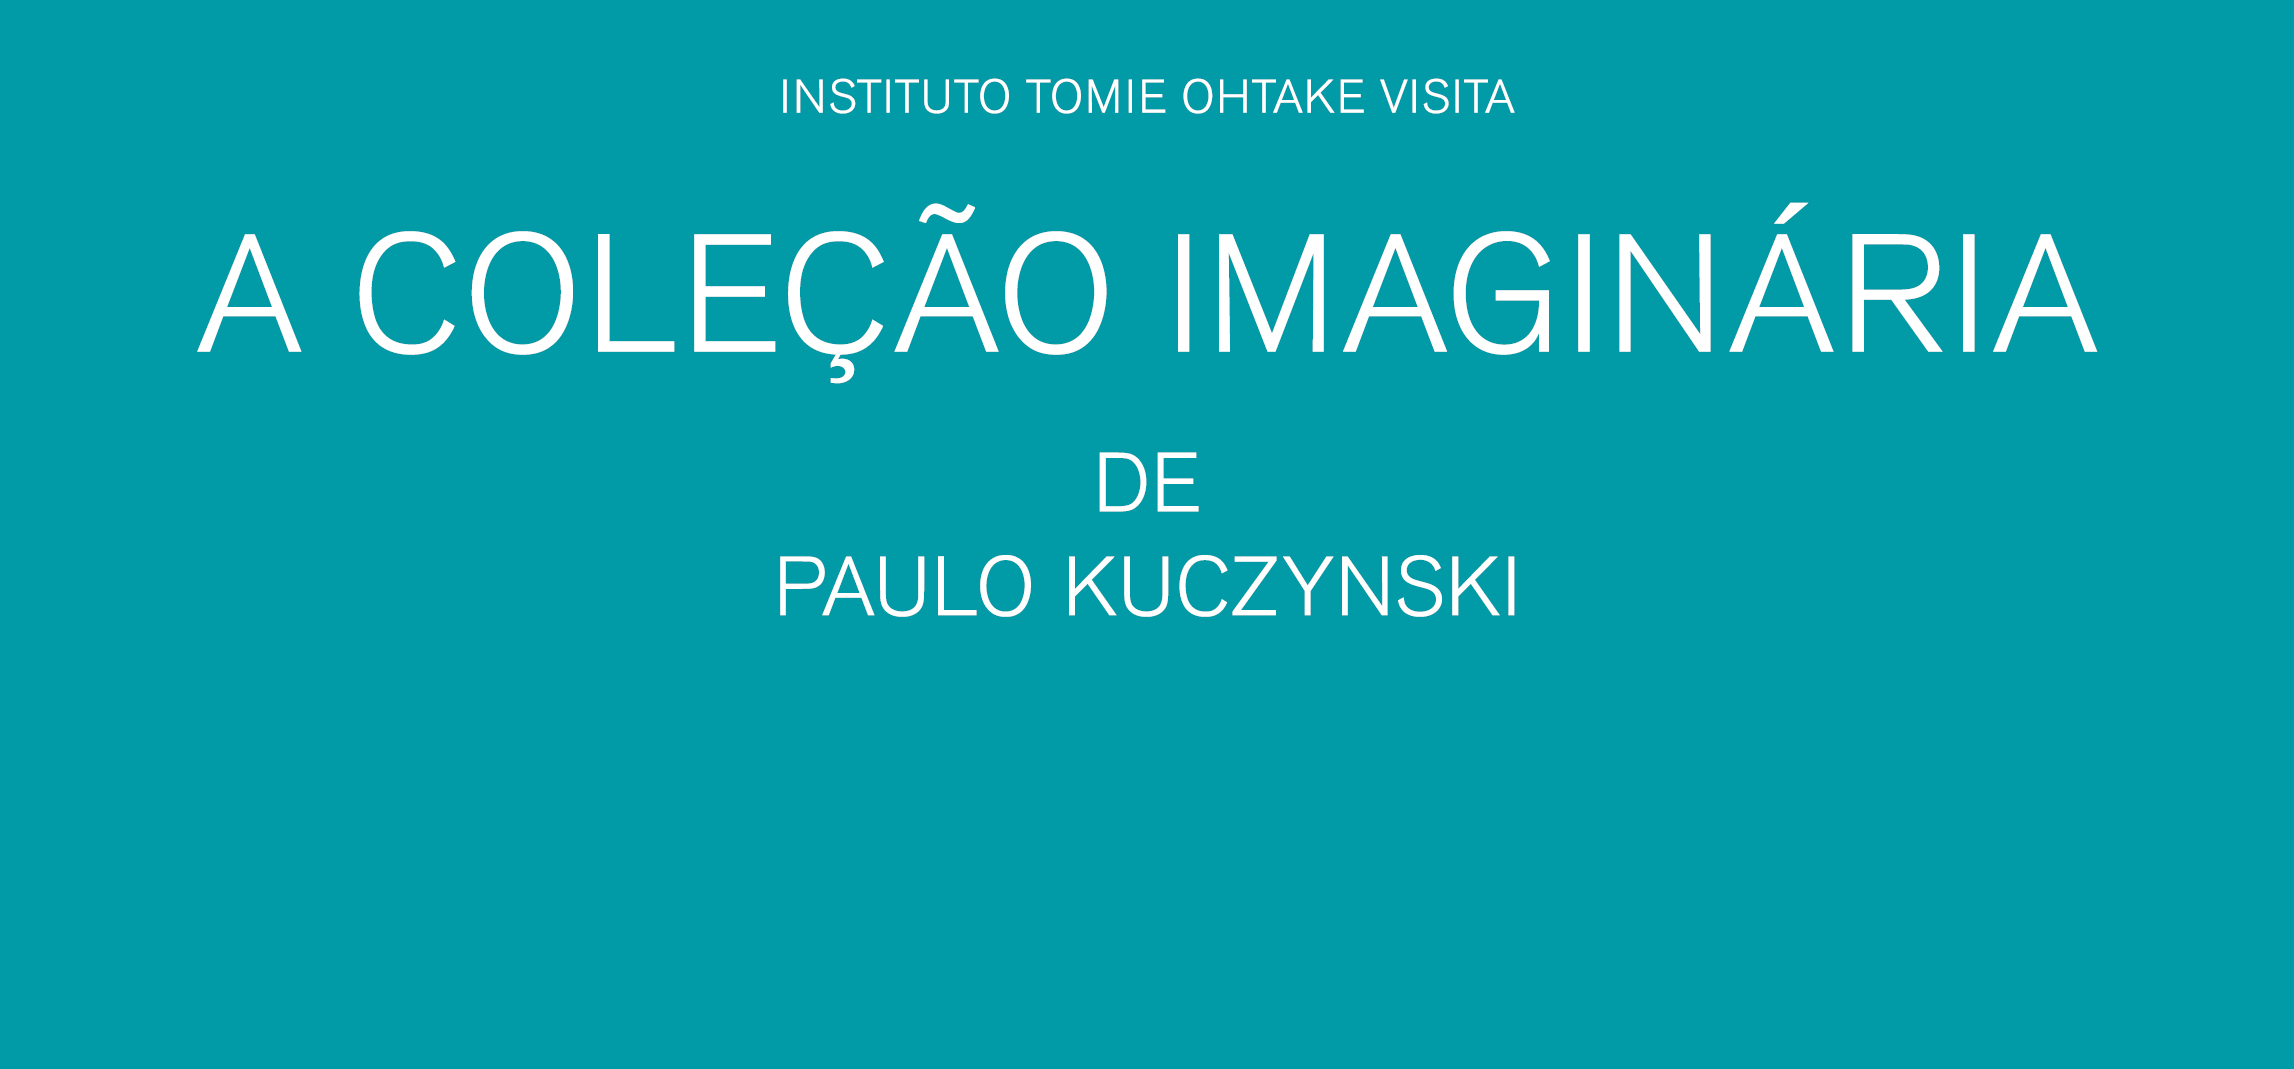 Instituto Tomie Ohtake visita: Coleção Imaginária de Paulo Kuczynski